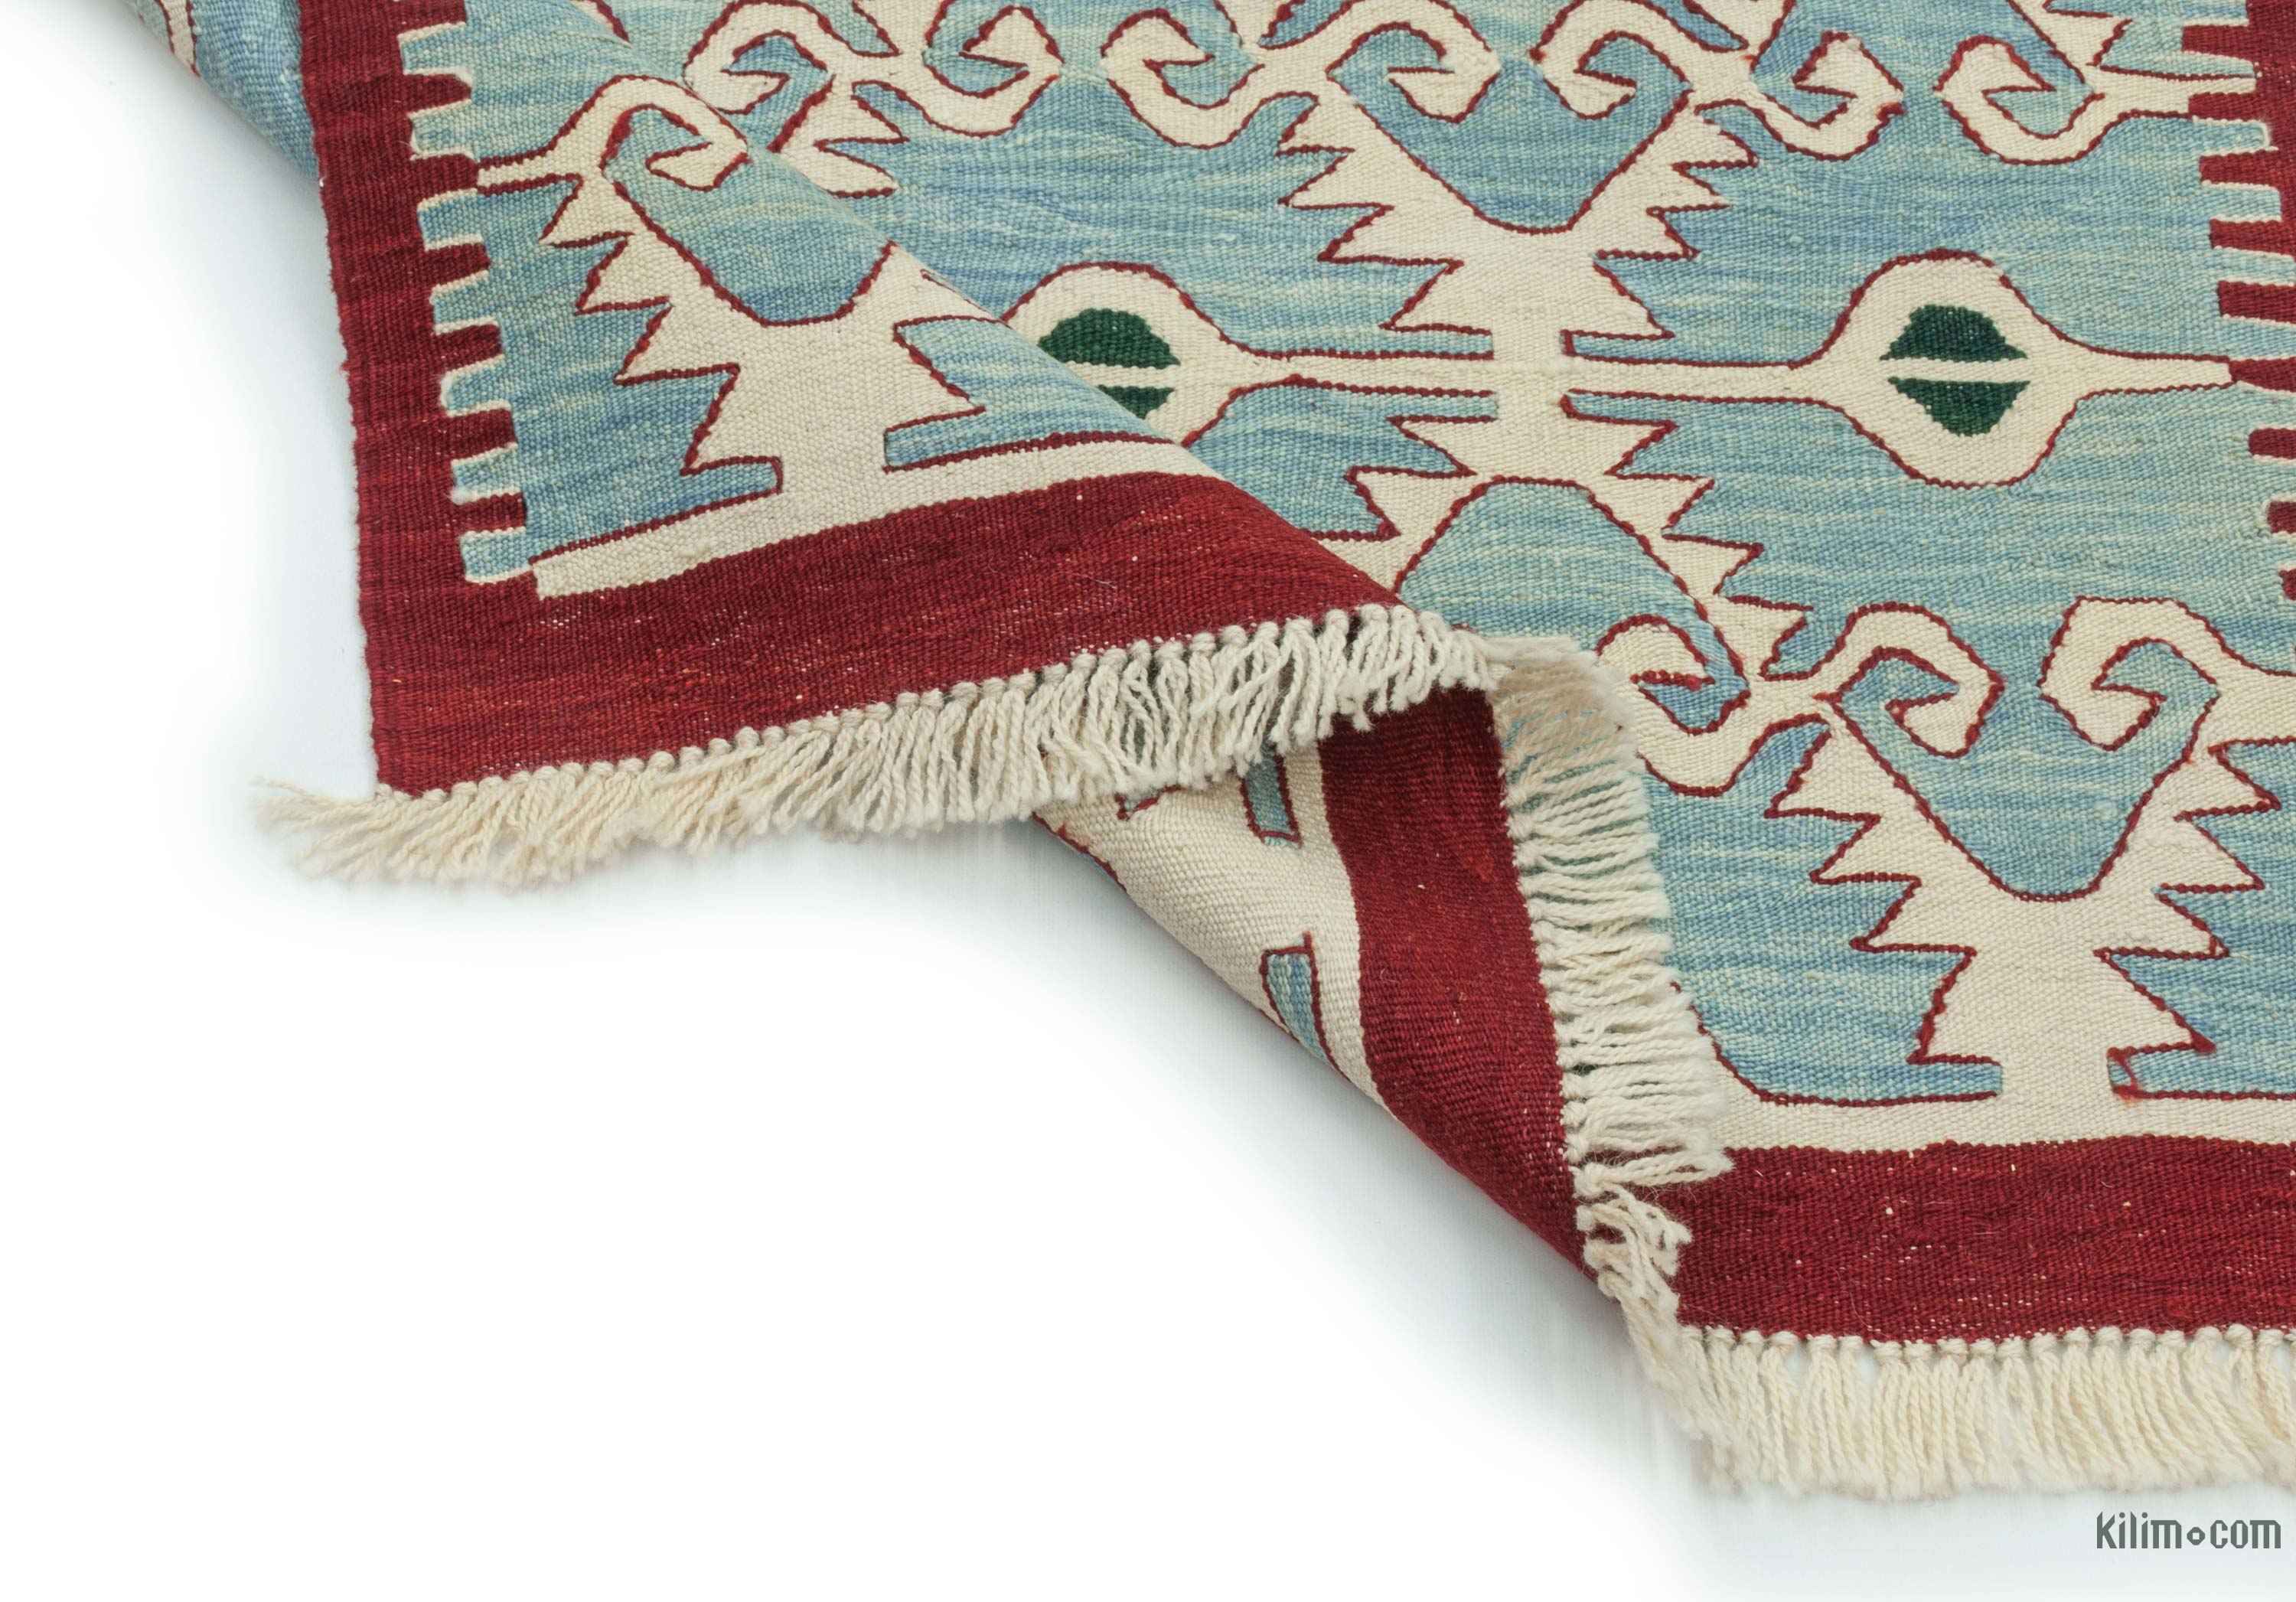 Aztec rug   2.62x9.68ft Handwoven rug Unique kilim rug Hallway Runner Kilim rug Runner rug Soft color Turkish kilim Geometric kilim